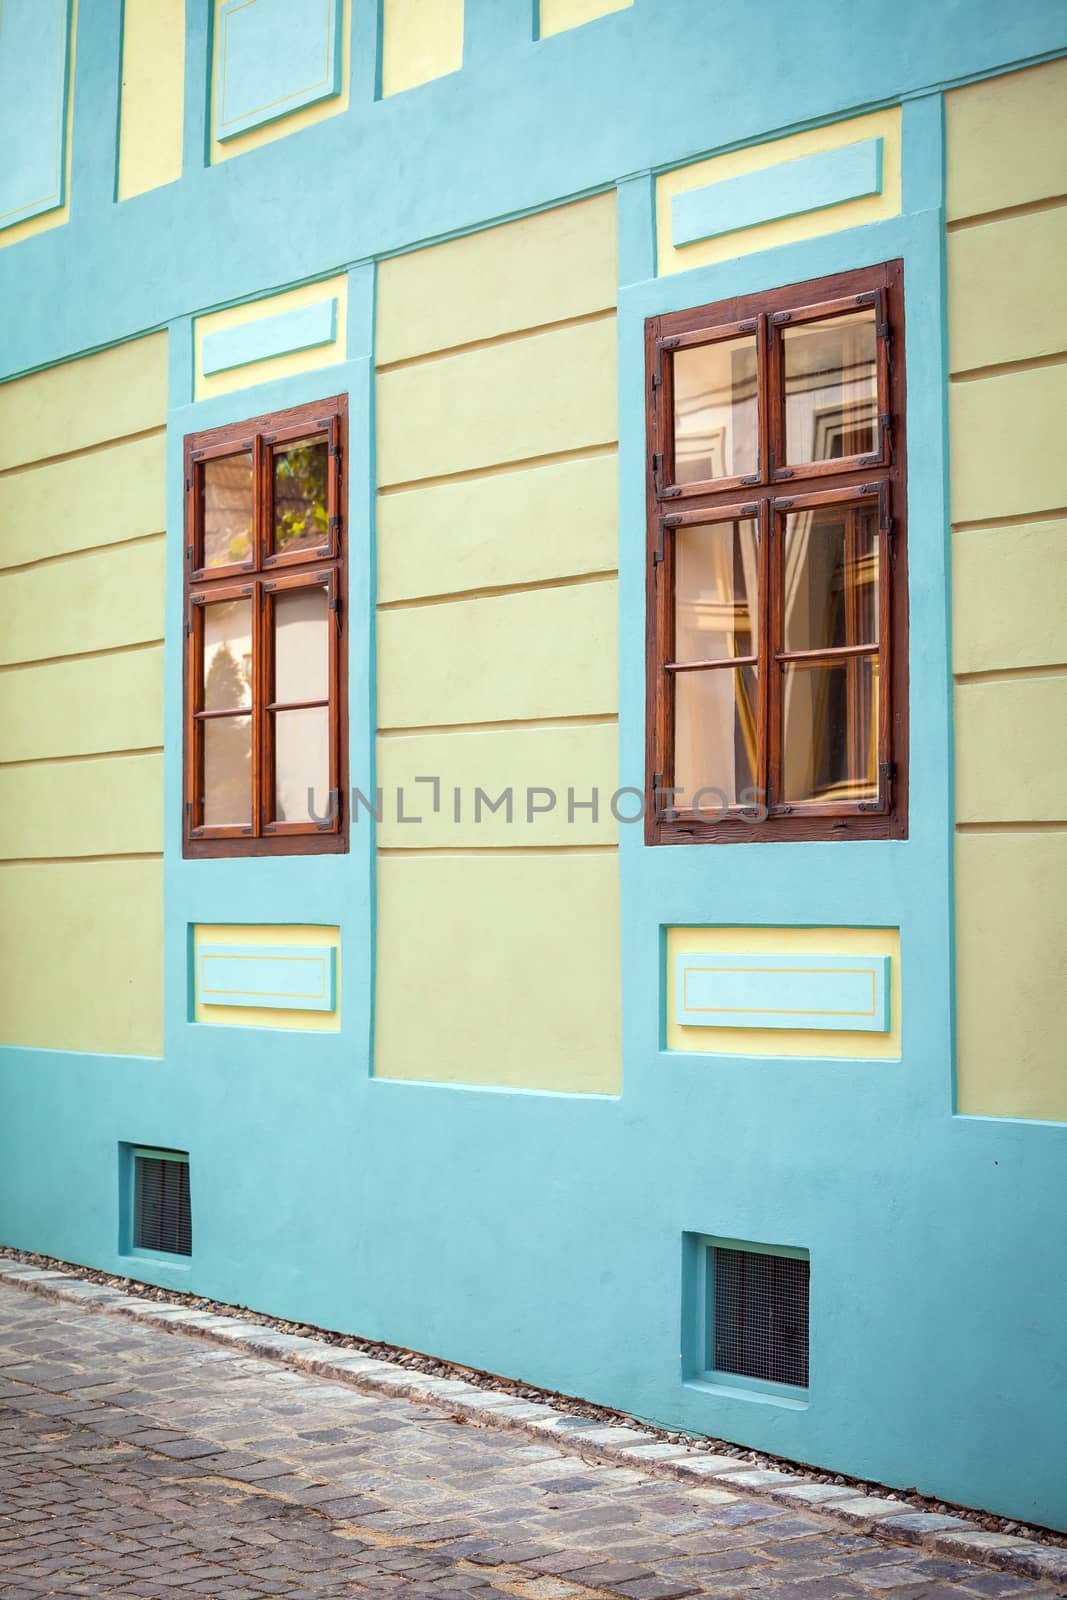 Sighisoara, Romania - June 23, 2013: Blue house facade with wooden windows from Sighisoara city old center, Transylvania, Romania